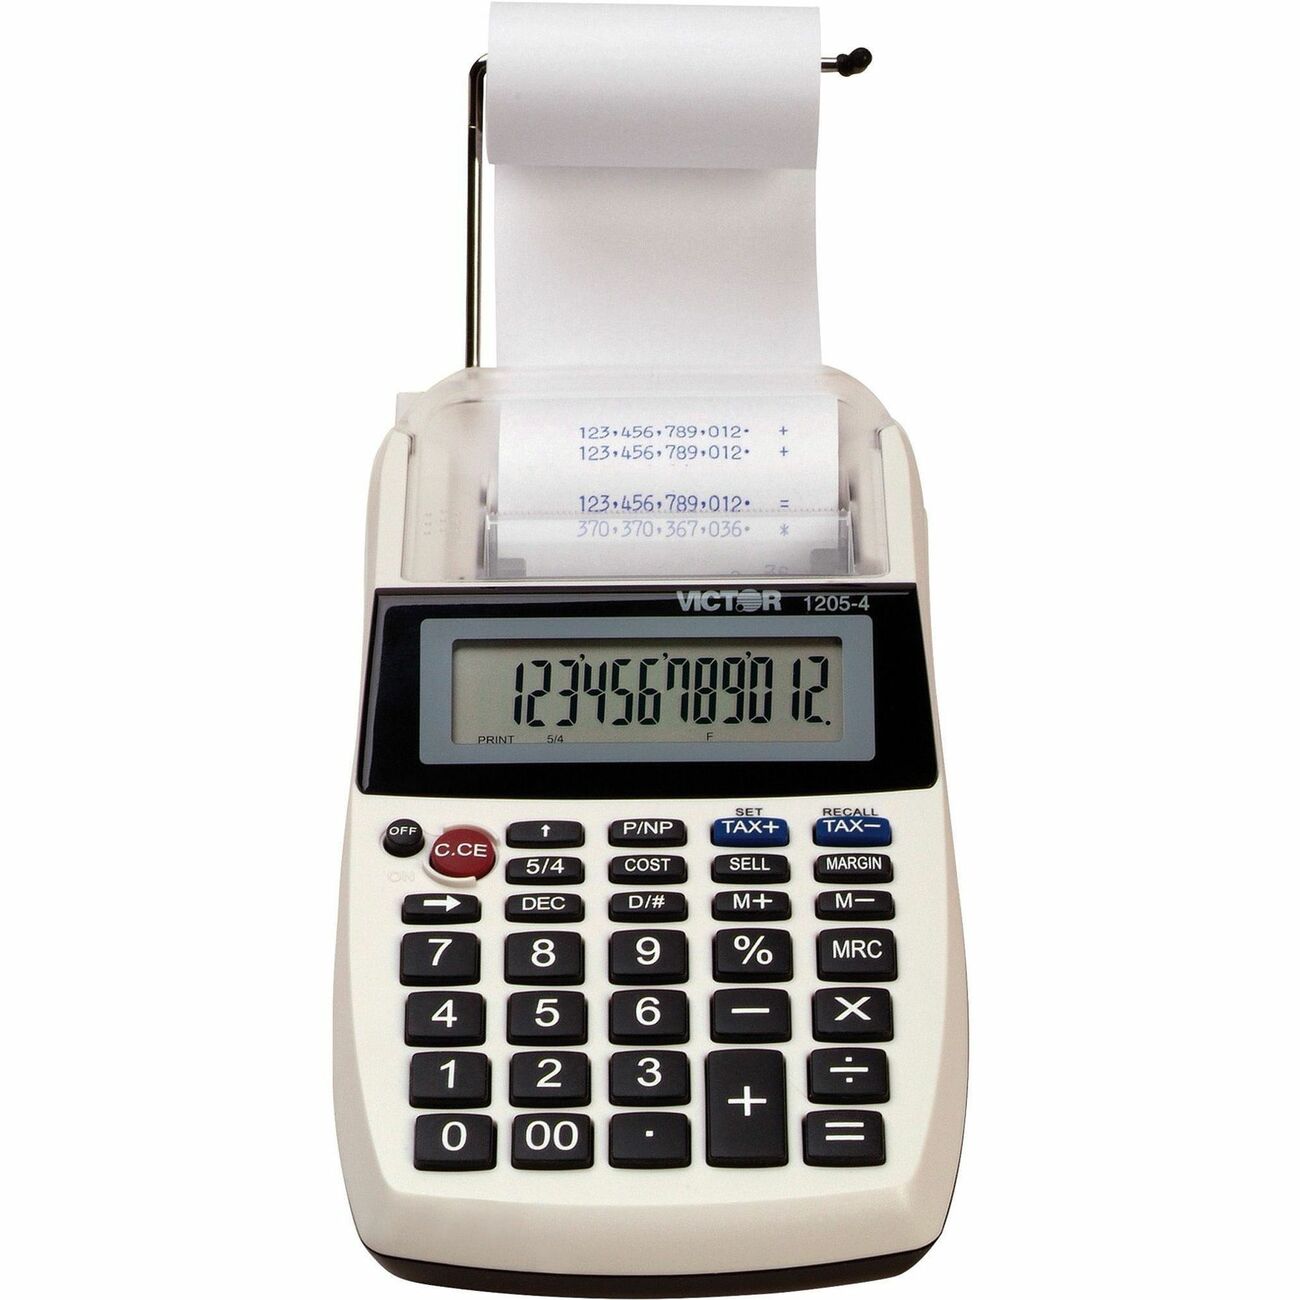 VCT12054  Victor 1205-4 12 Digit Desktop Printing Calculator 